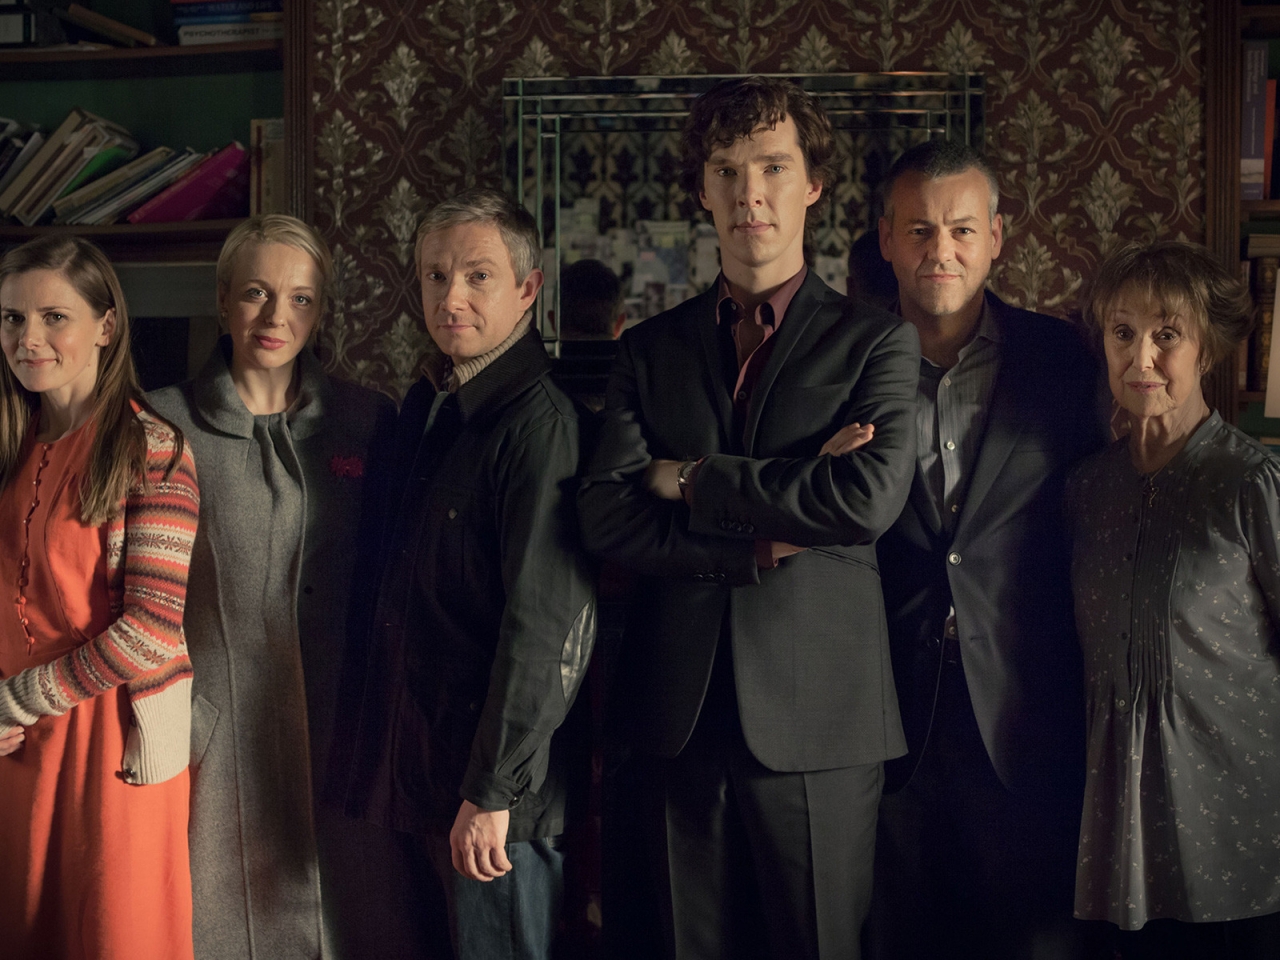 BBC Sherlock Cast for 1280 x 960 resolution